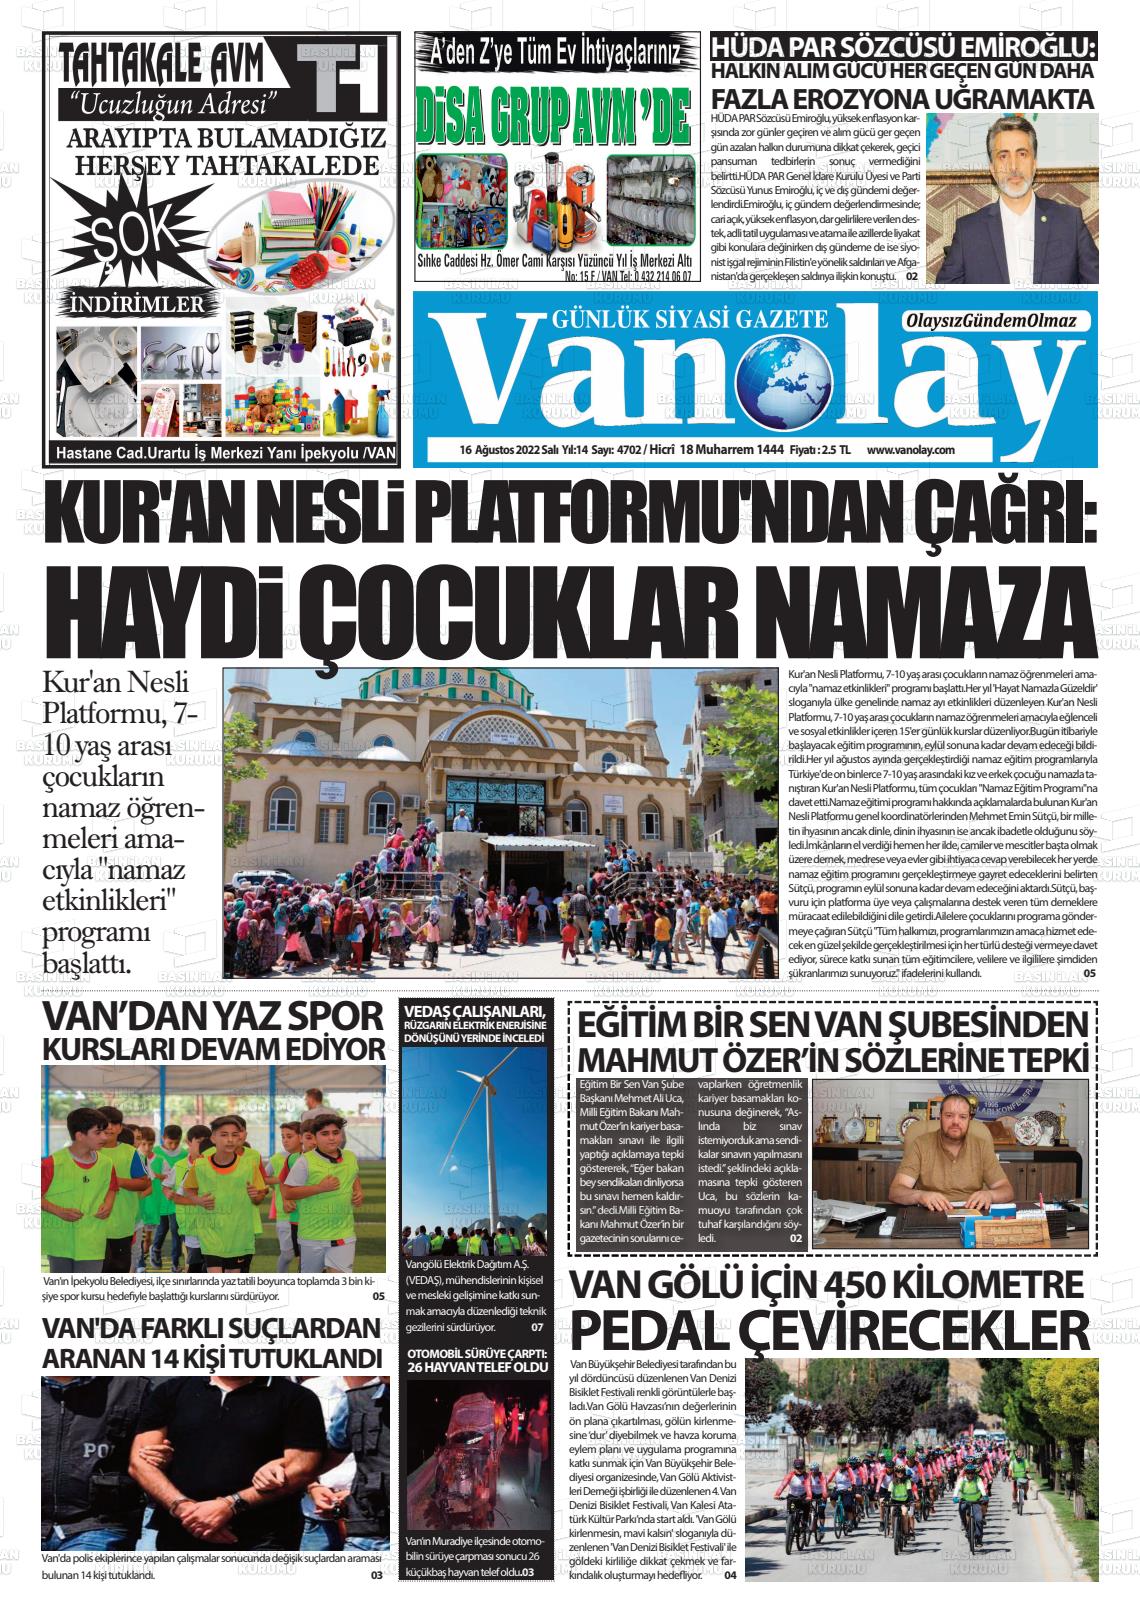 16 Ağustos 2022 Van Olay Gazete Manşeti